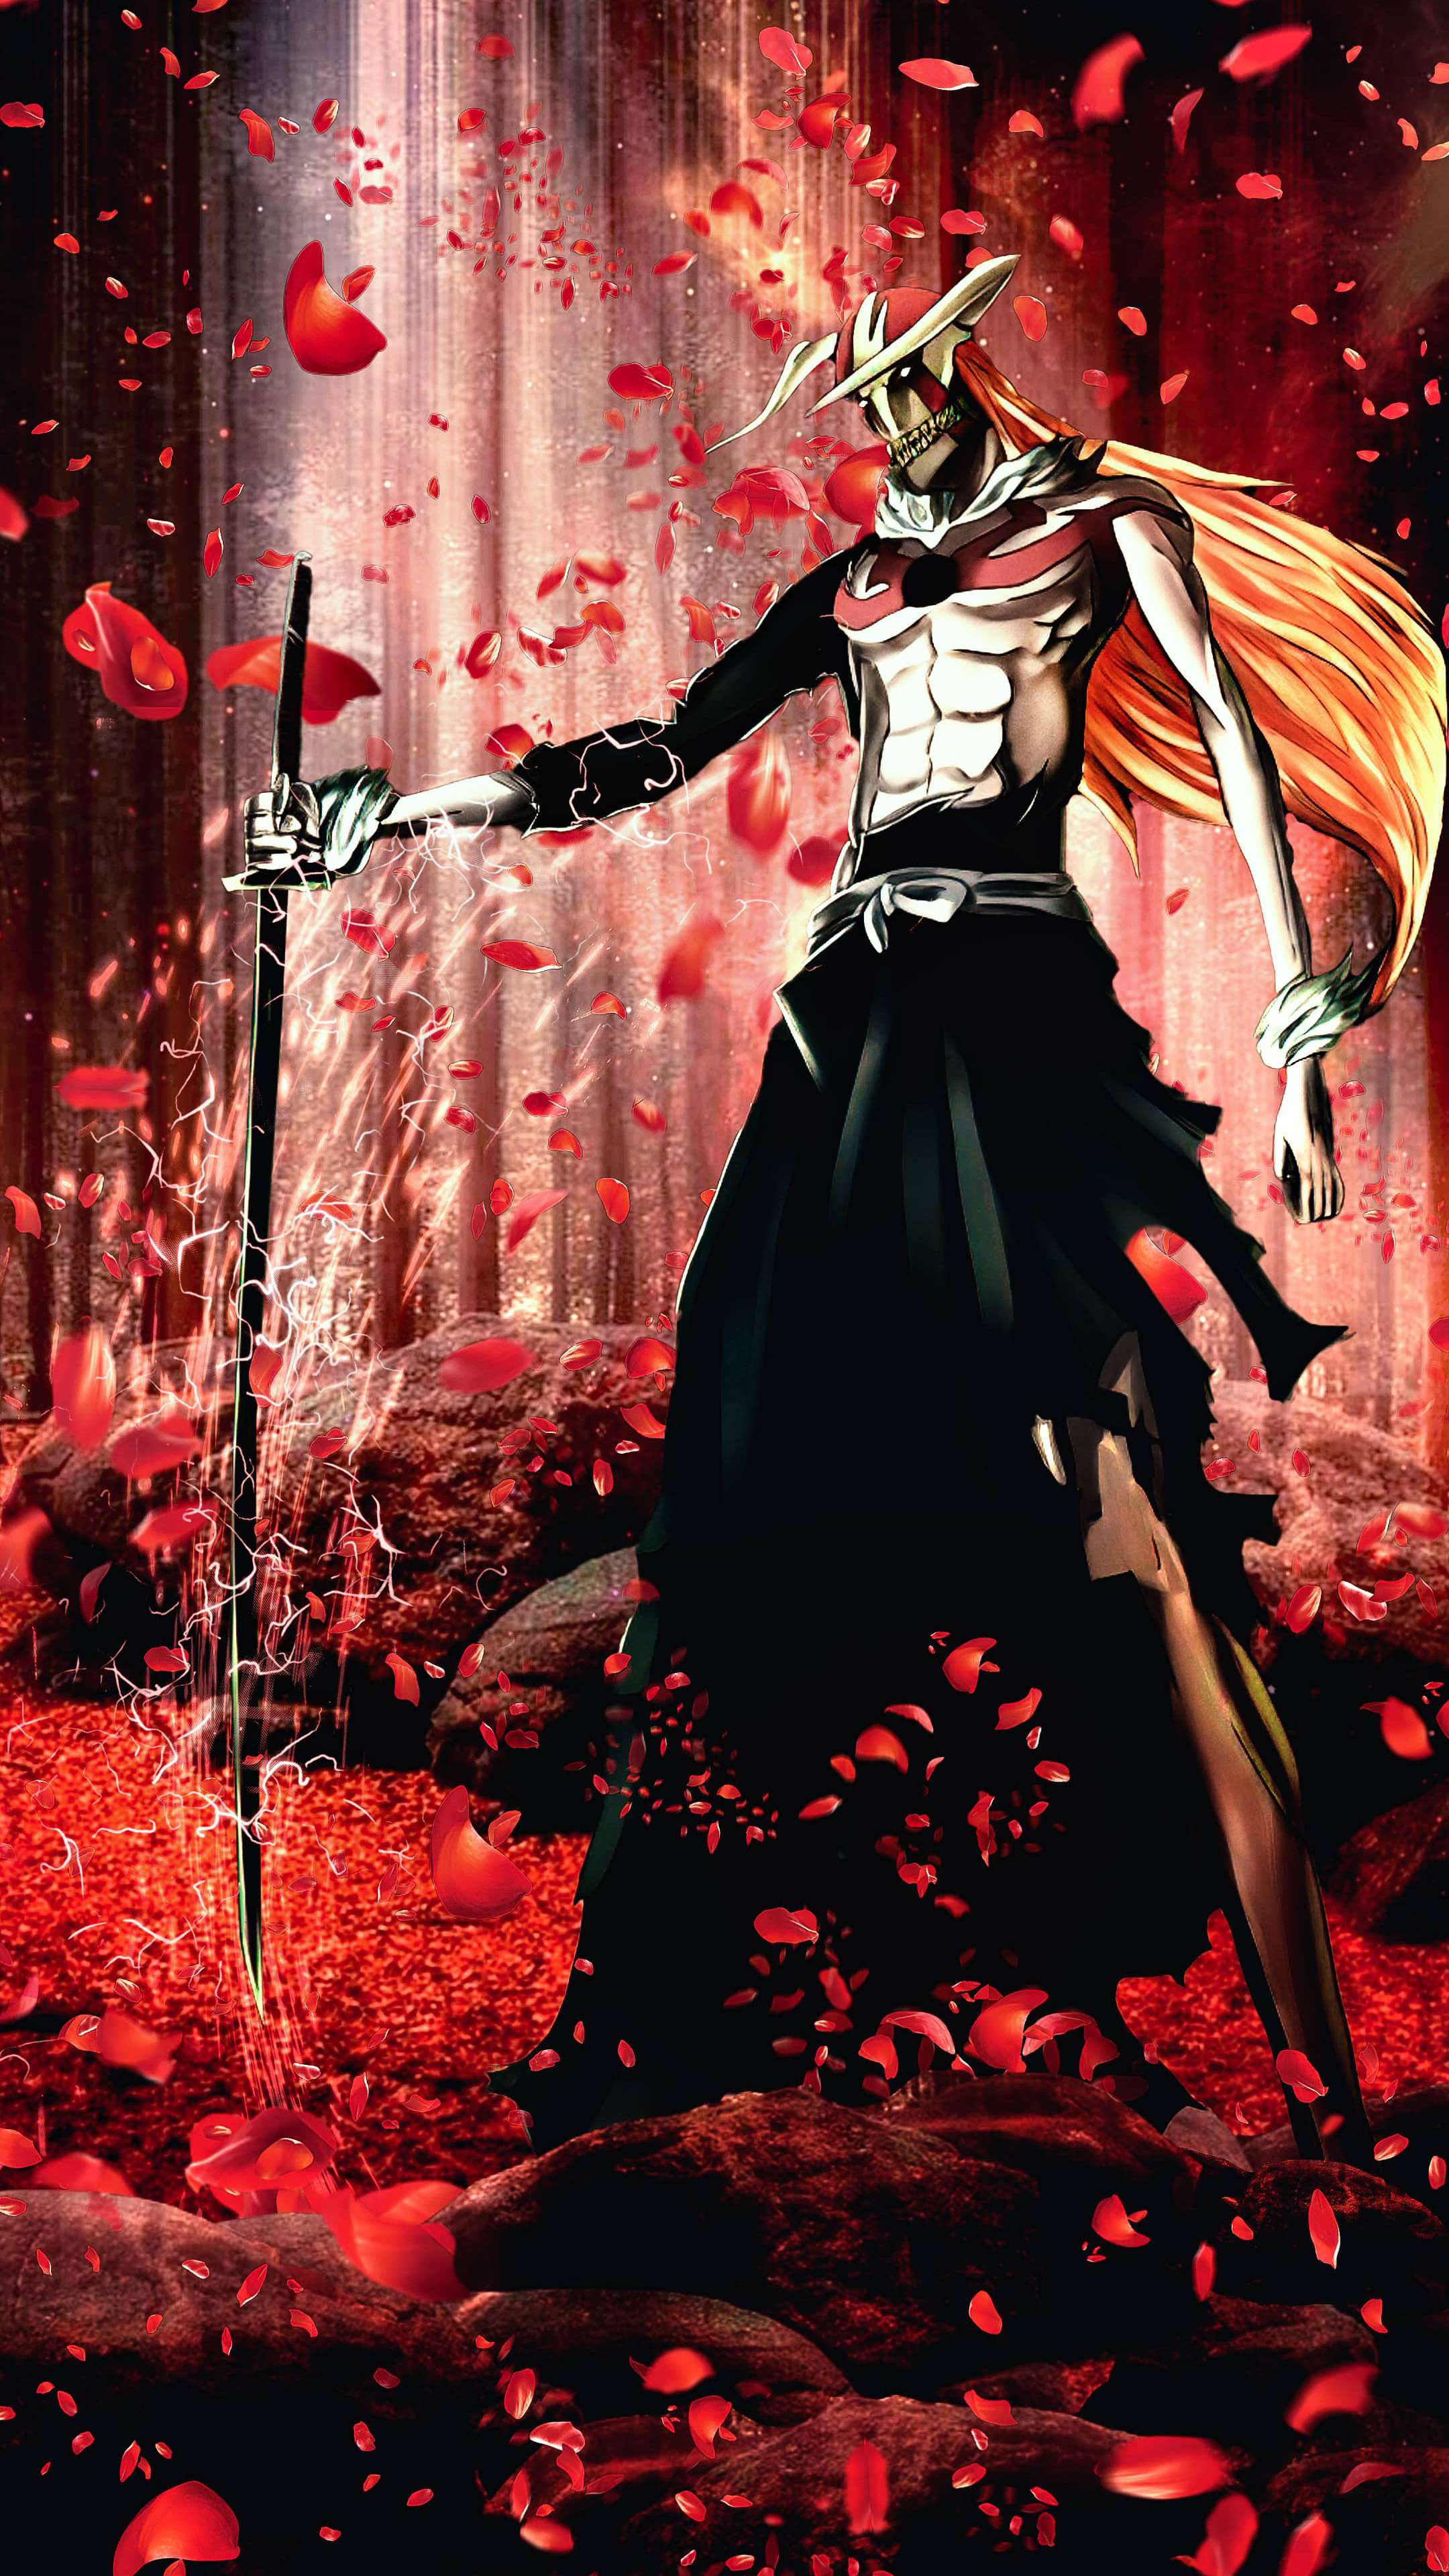 Vasto Lorde wallpaper by azfareredza - Download on ZEDGE™